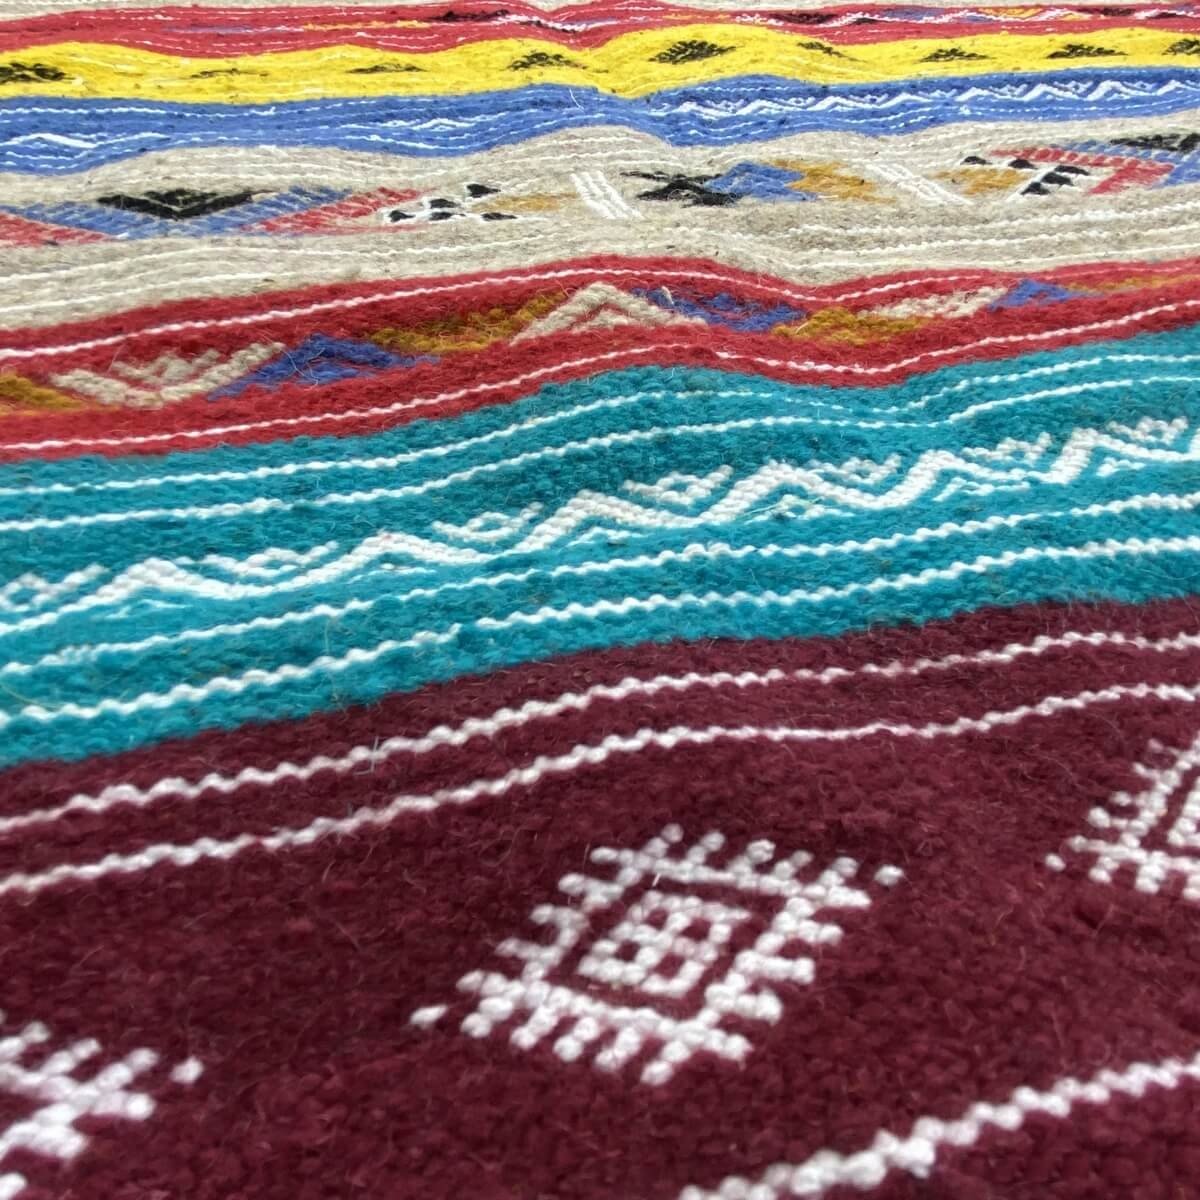 Berber tapijt Tapijt Kilim Kela 115x210 Veelkleurig (Handgeweven, Wol, Tunesië) Tunesisch kilimdeken, Marokkaanse stijl. Rechtho